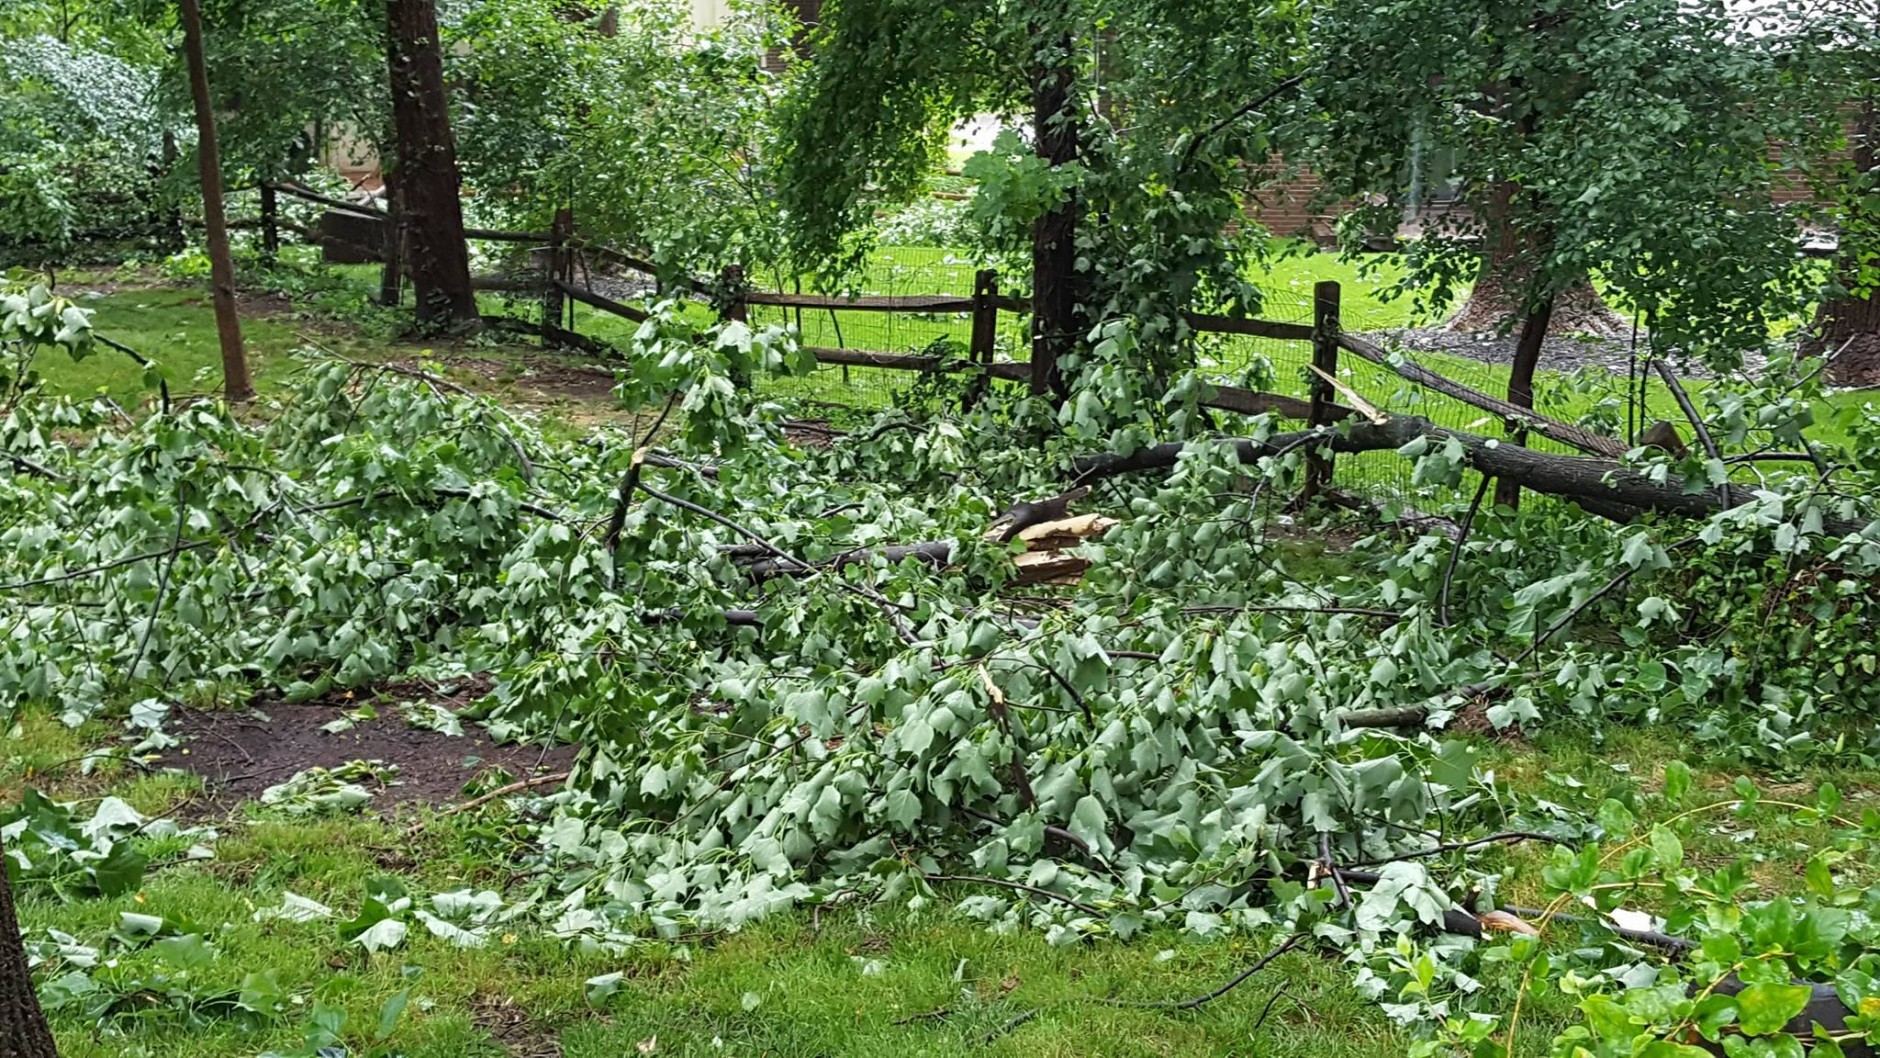 Storm damage in Columbia, Maryland on June 21, 2016. (Courtesy Alana Casanova Johnson)